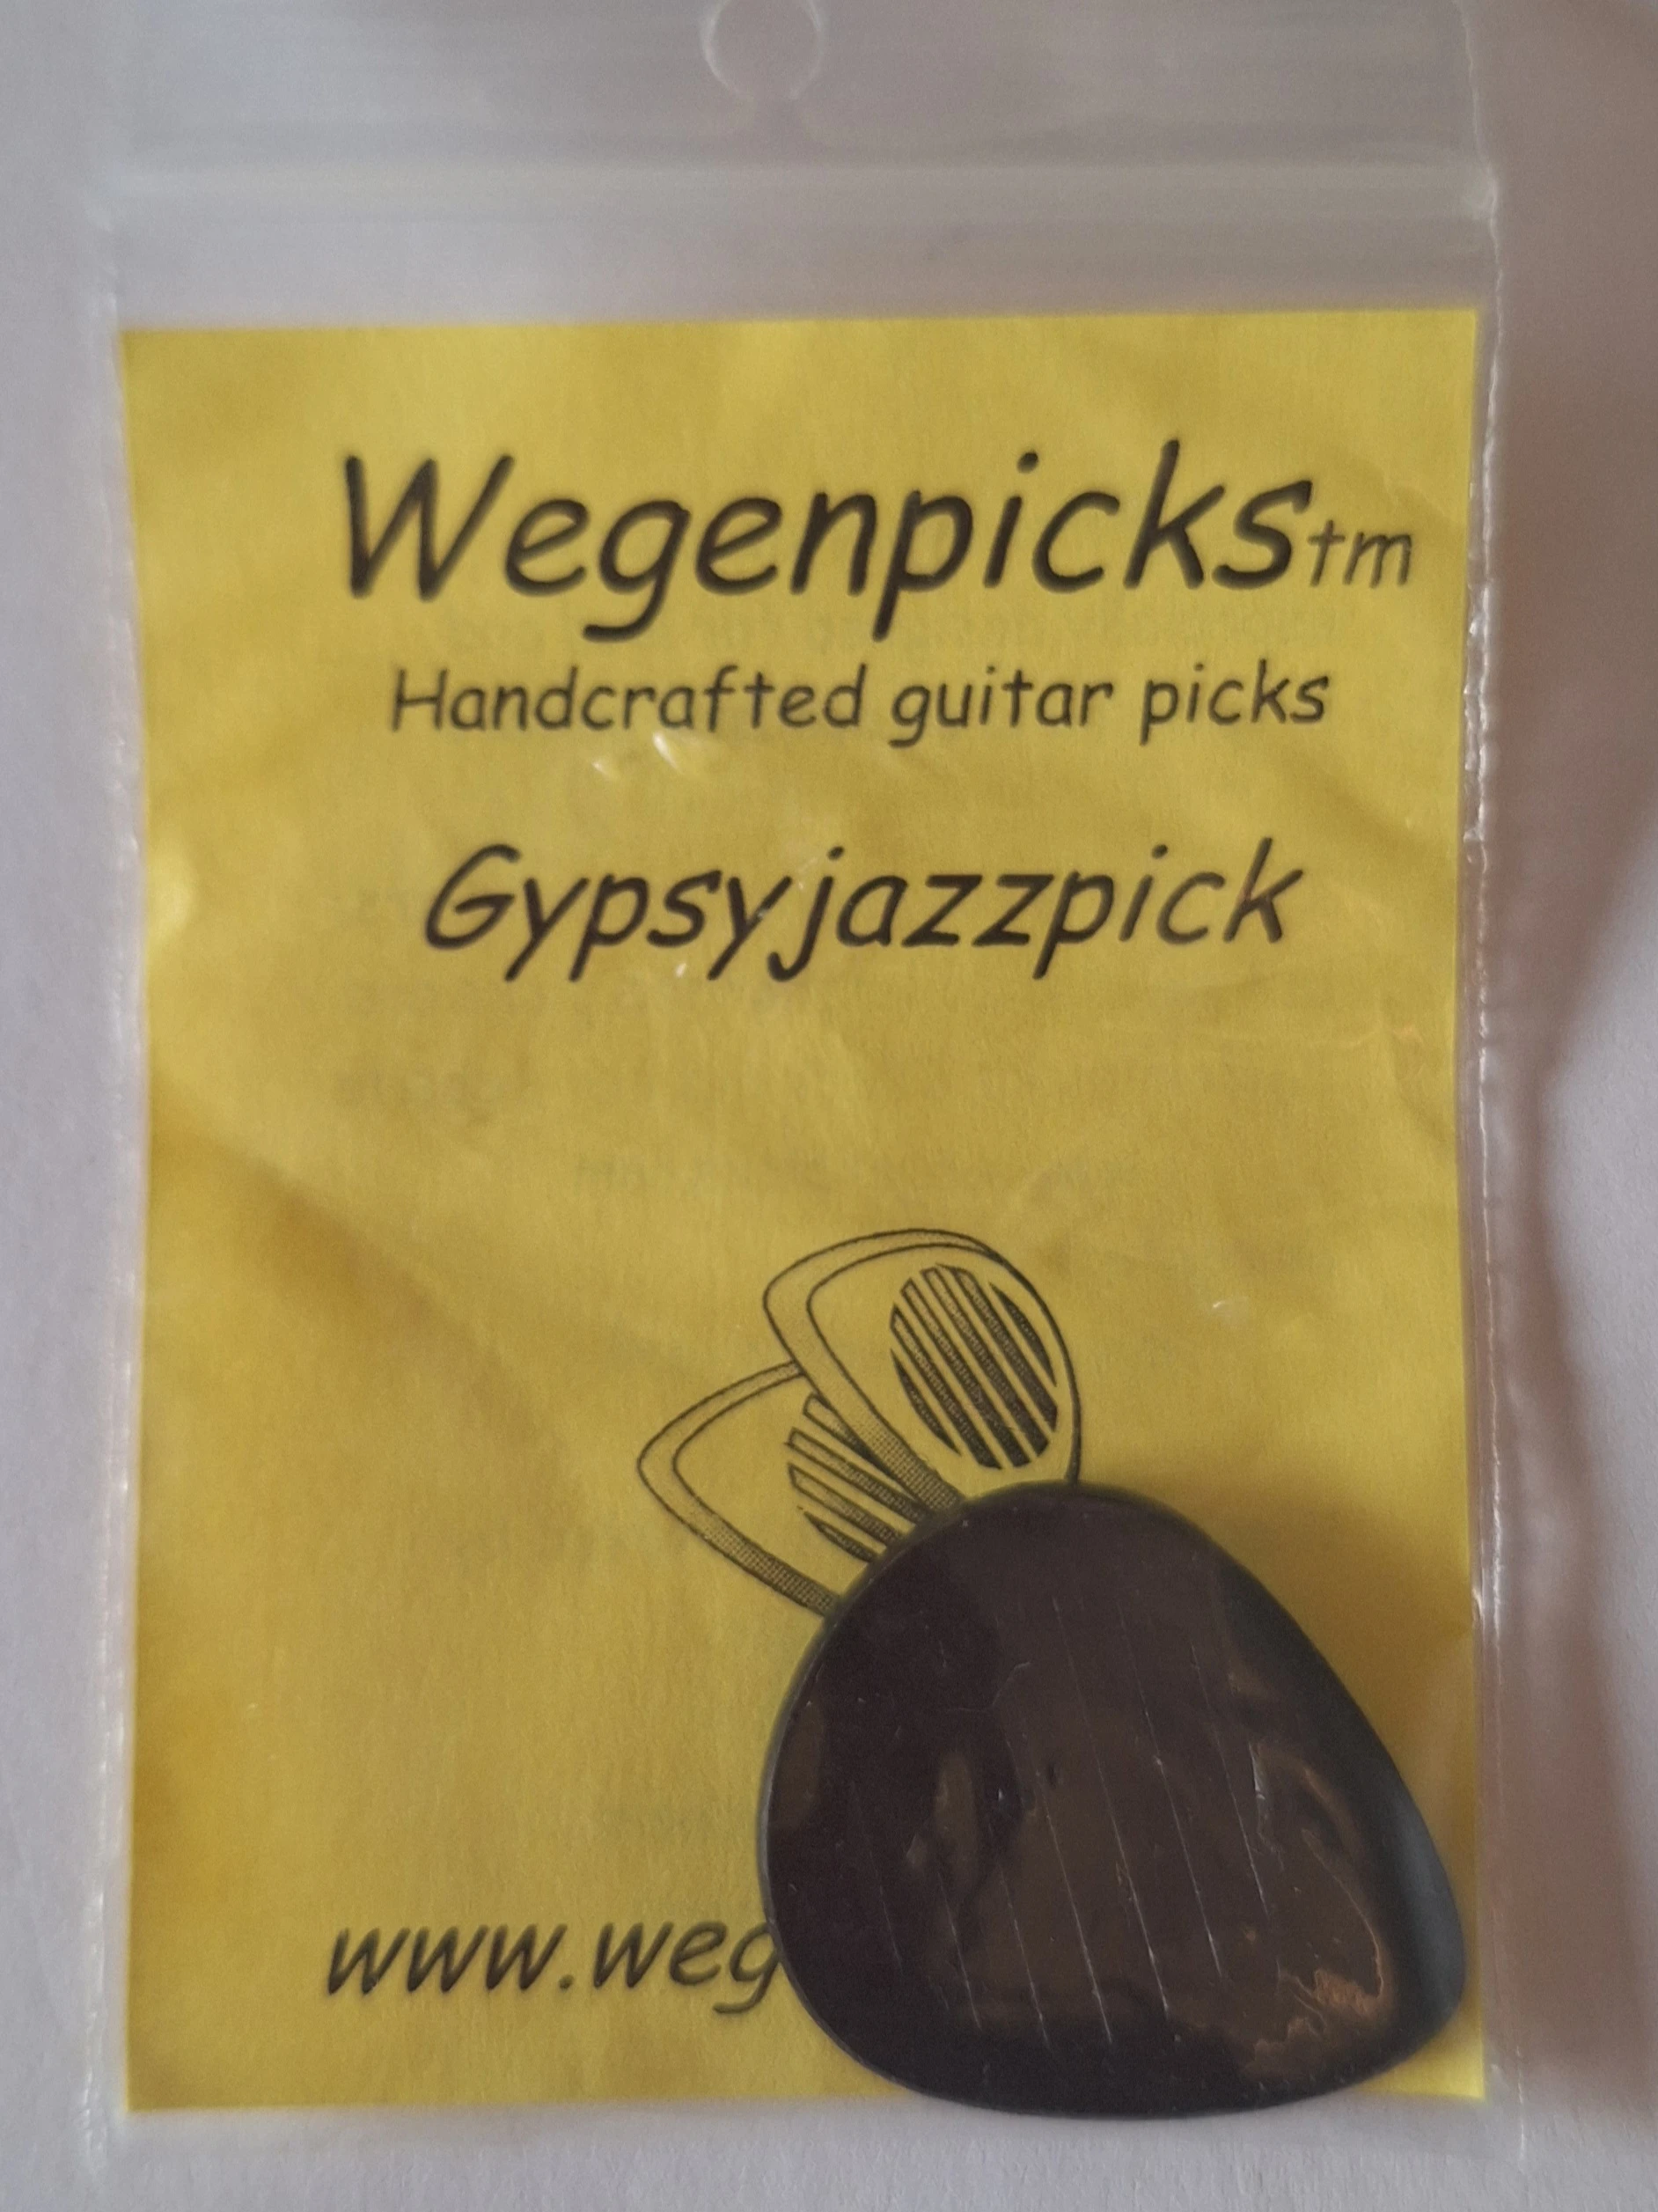 Wegenpicks Gypsyjazzpick GJPB 3,5mm Black